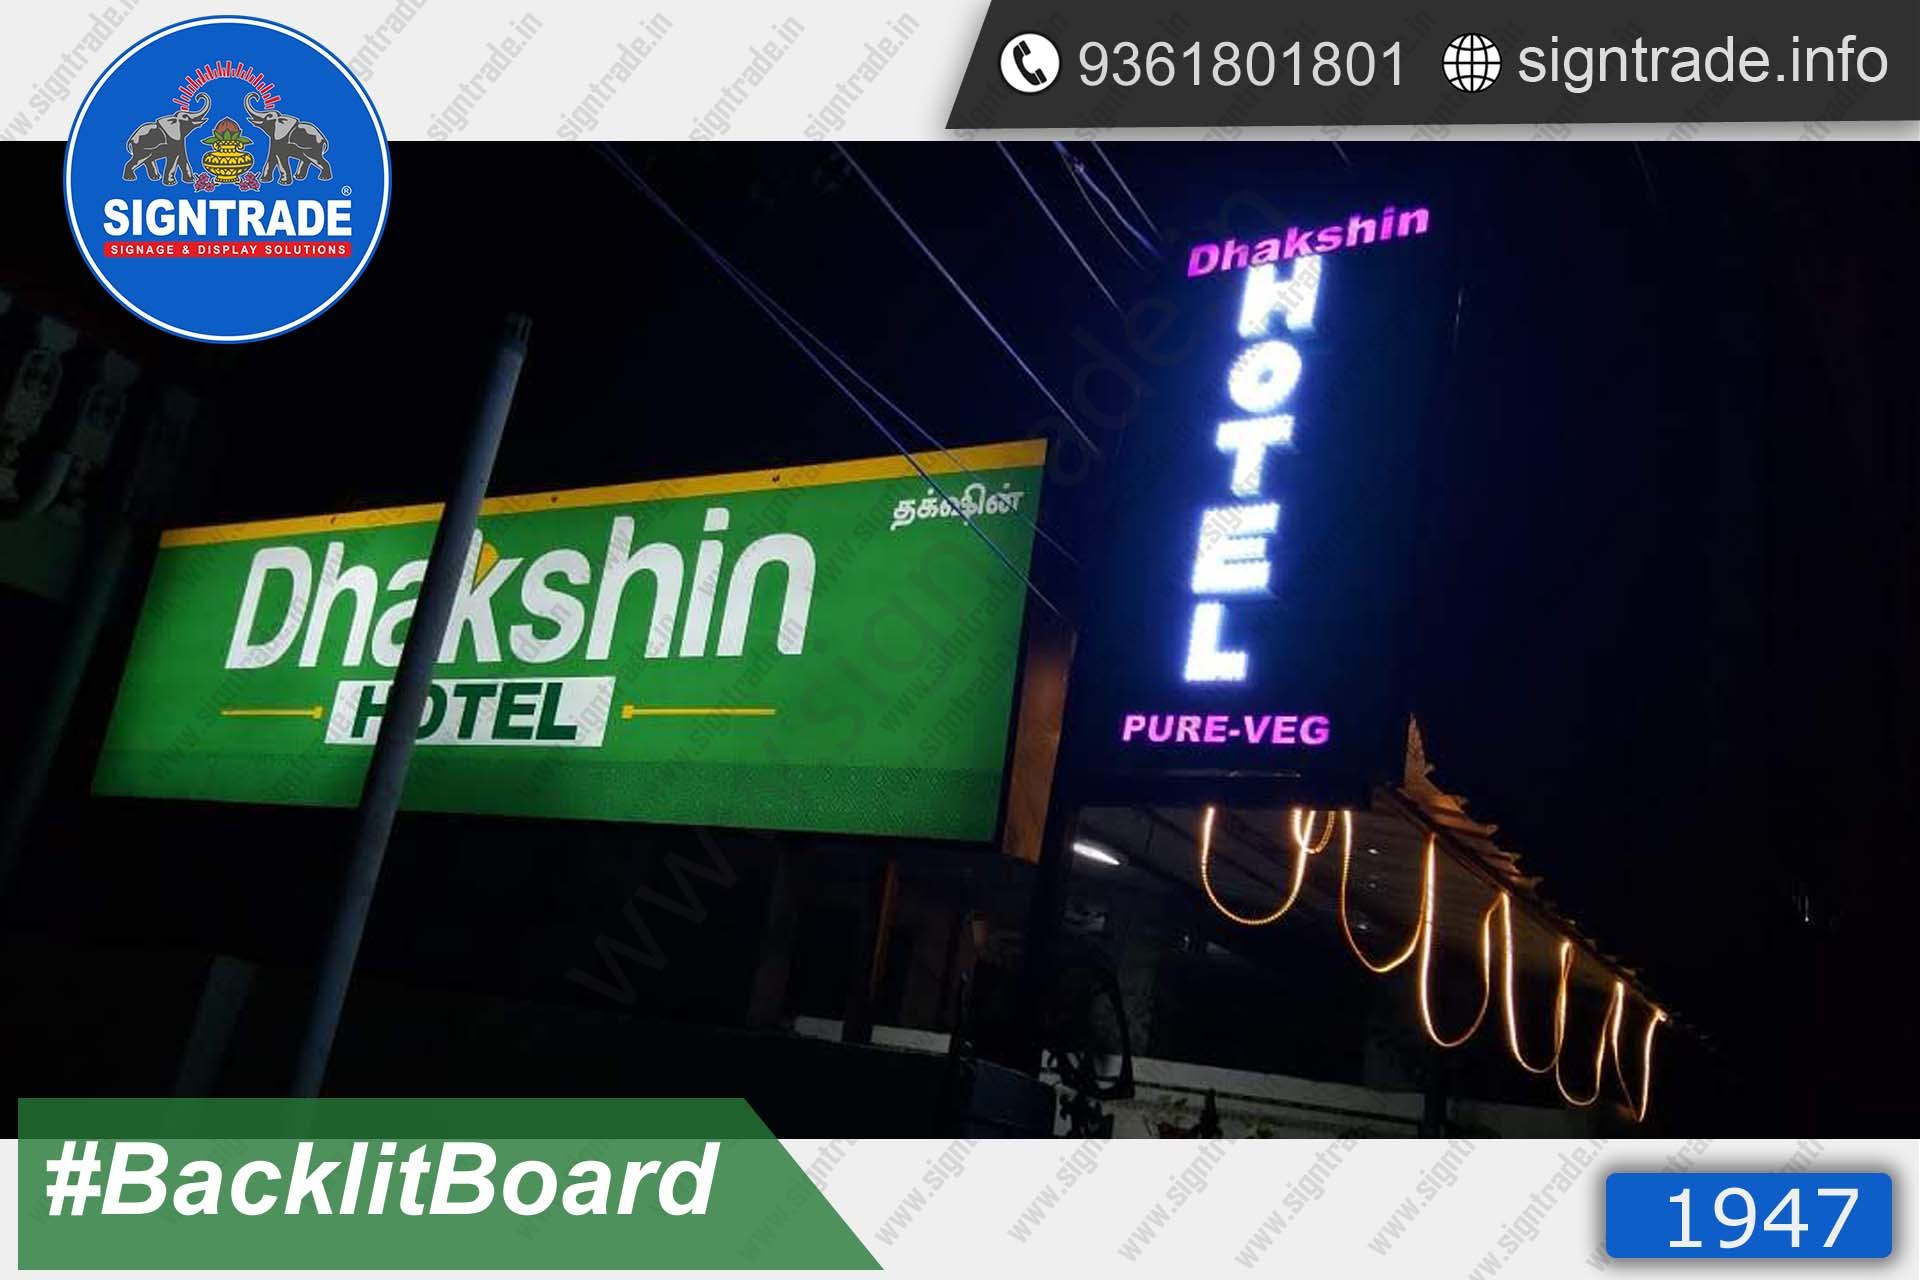 Dhakshin Hotel Backlit Board